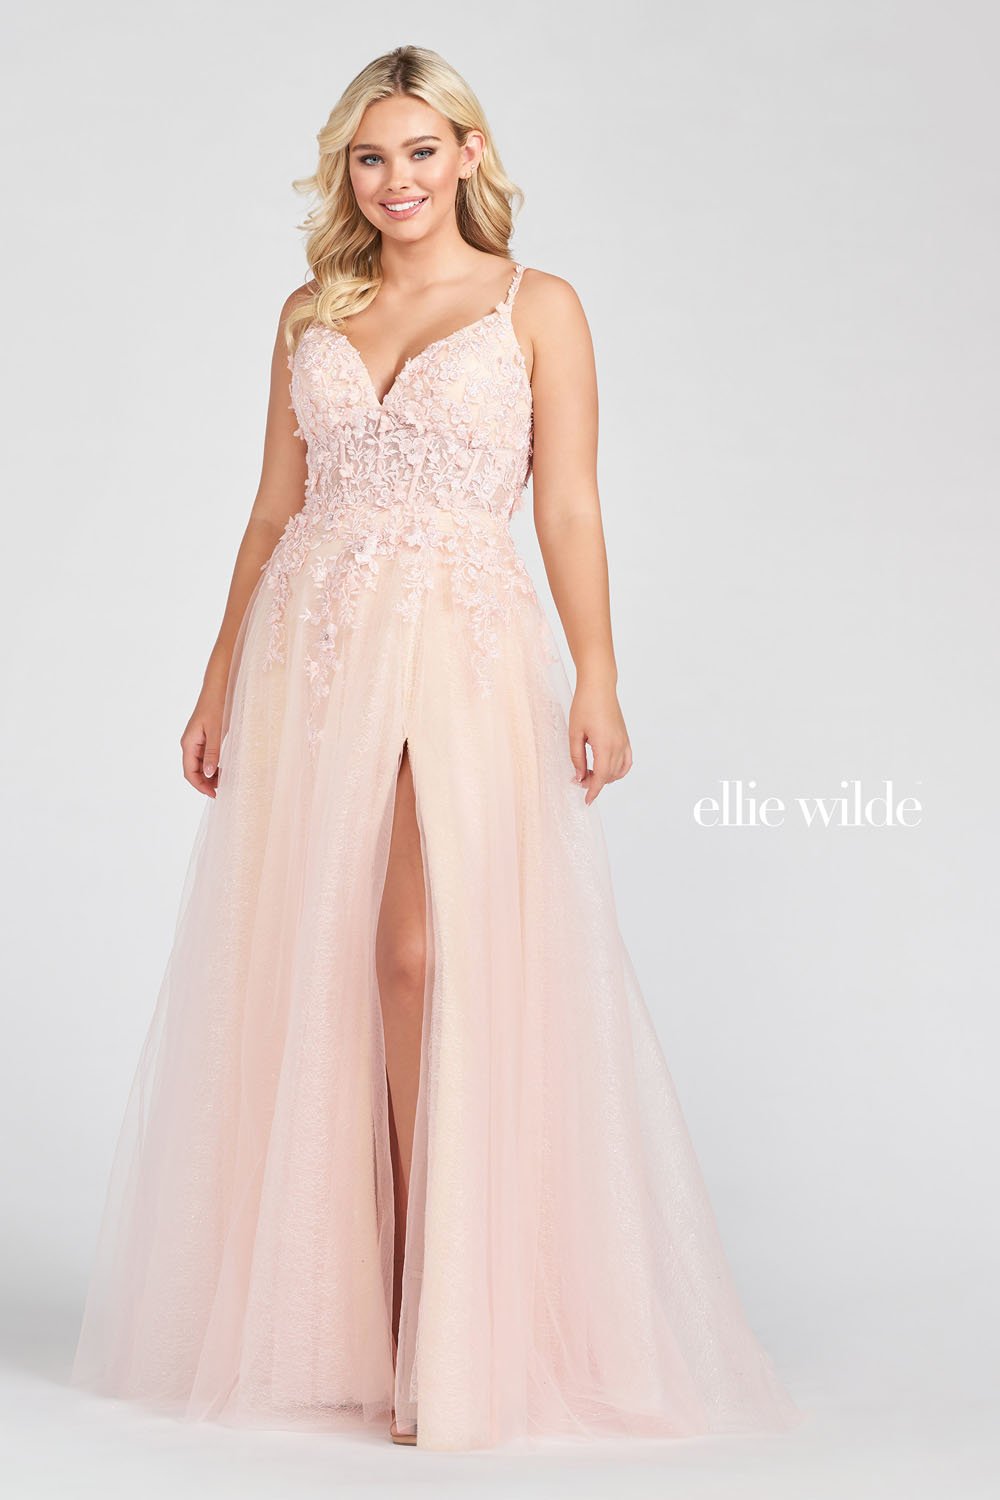 Ellie Wilde Blush Champagne EW122057 Prom Dress Image.  Blush Champagne formal dress.